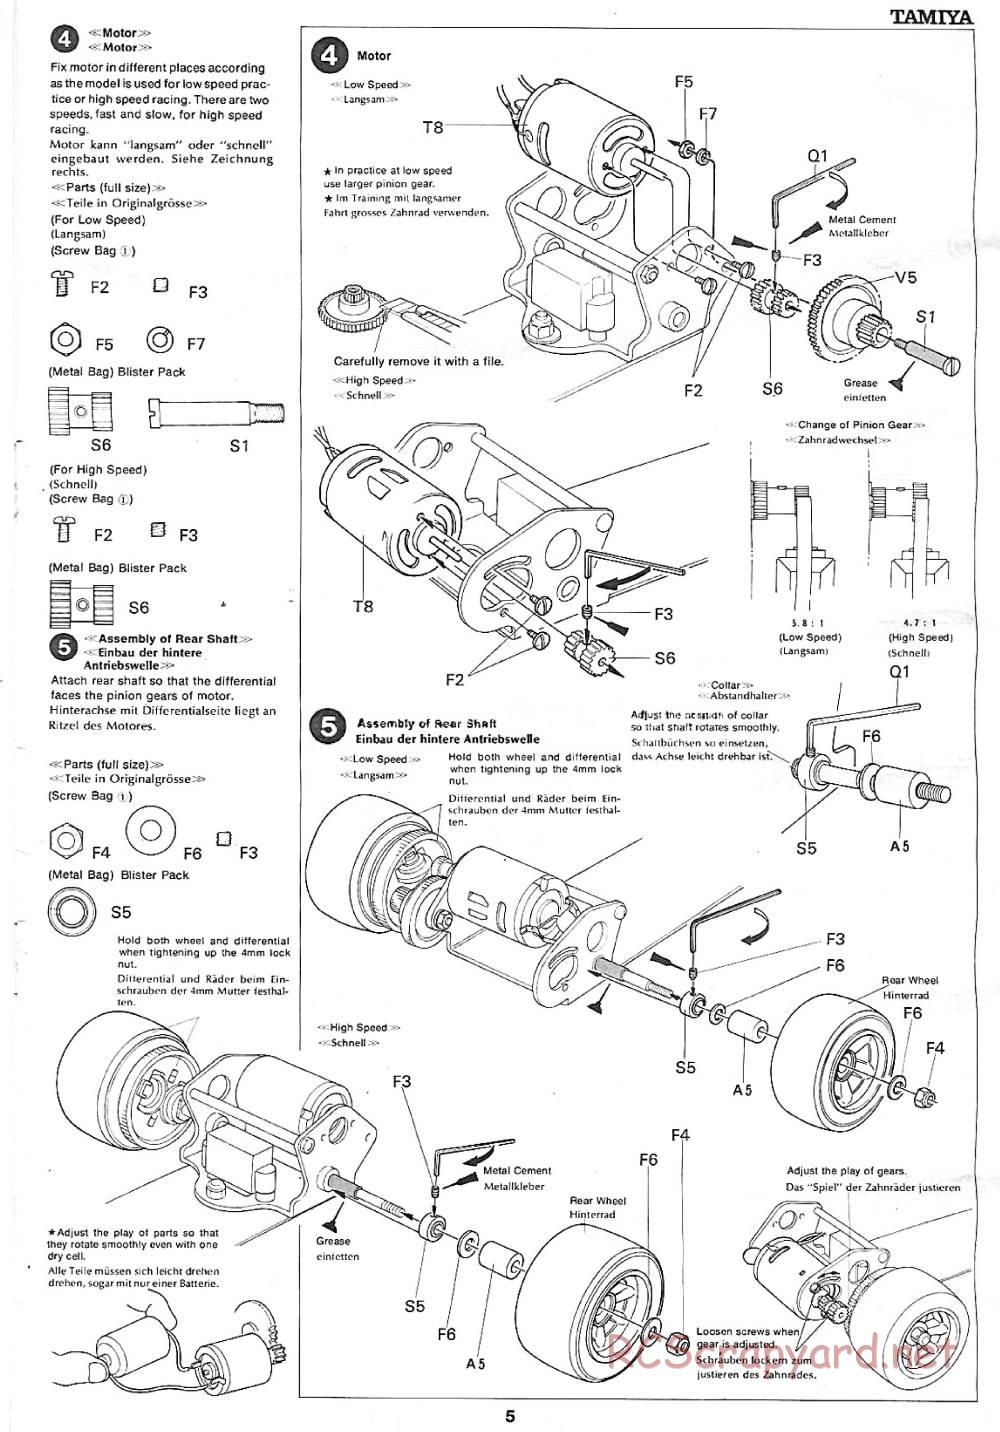 Tamiya - Martini Porsche 936 Turbo - 58006 - Manual - Page 5